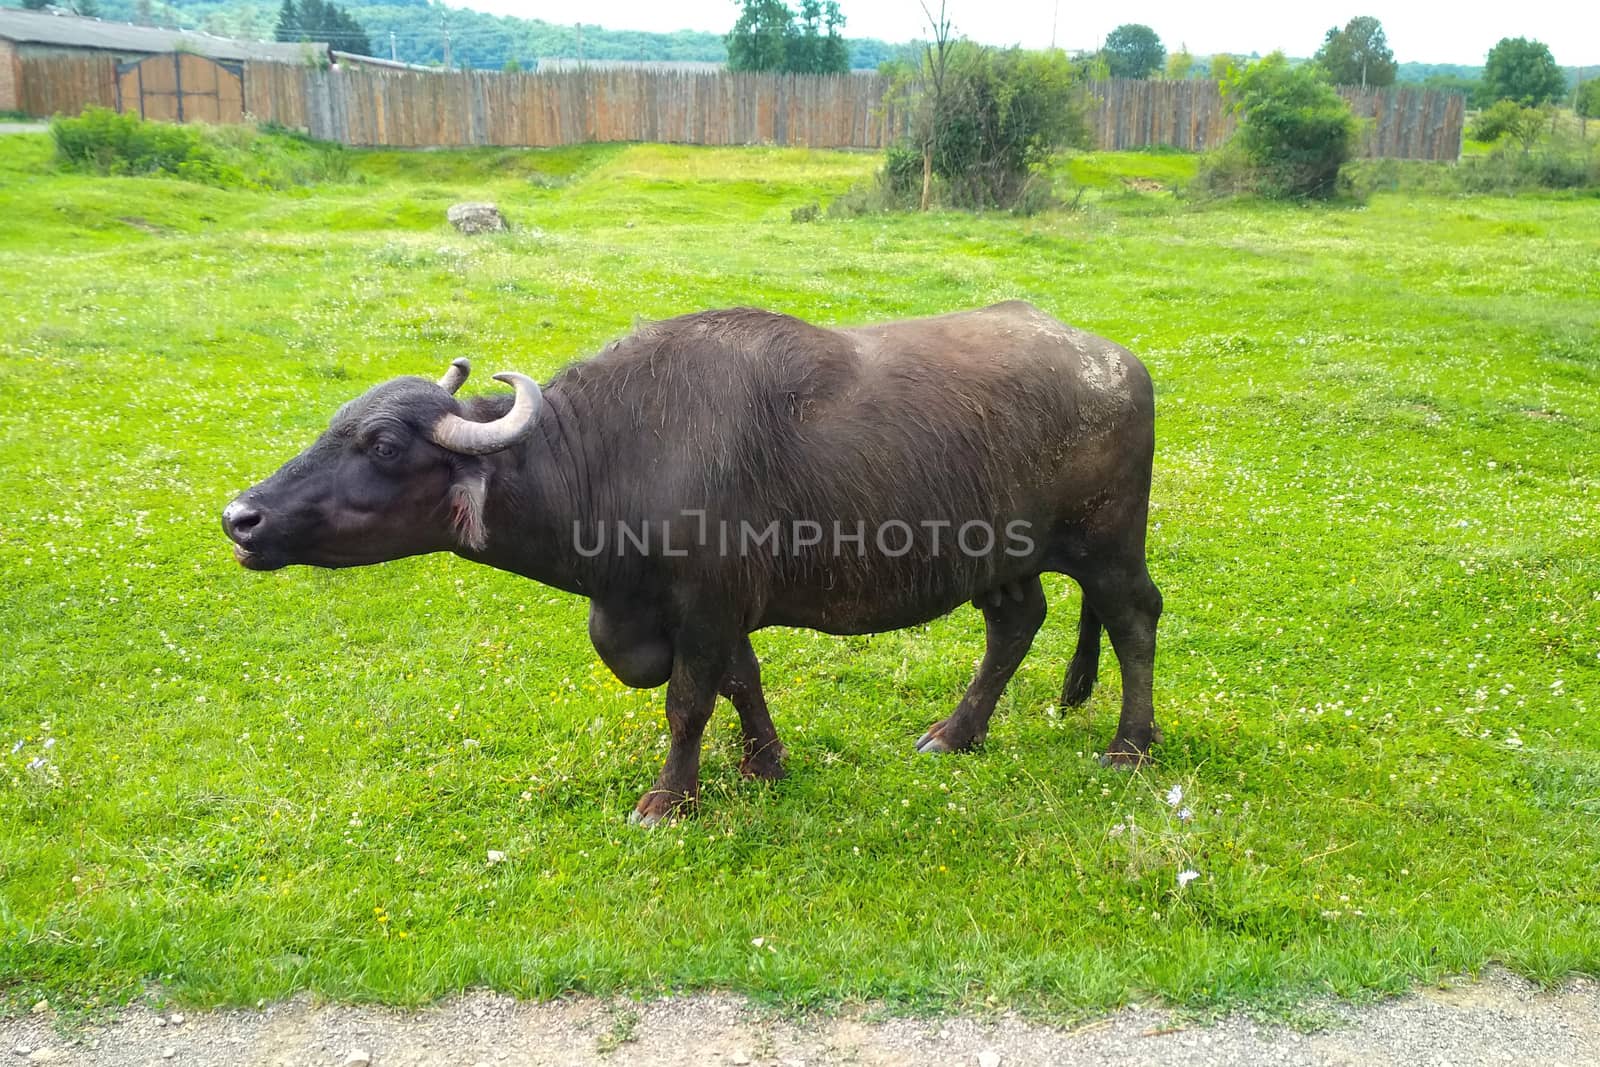 European black buffalo moo on farm against background of green grass. Bull grazing at the farm